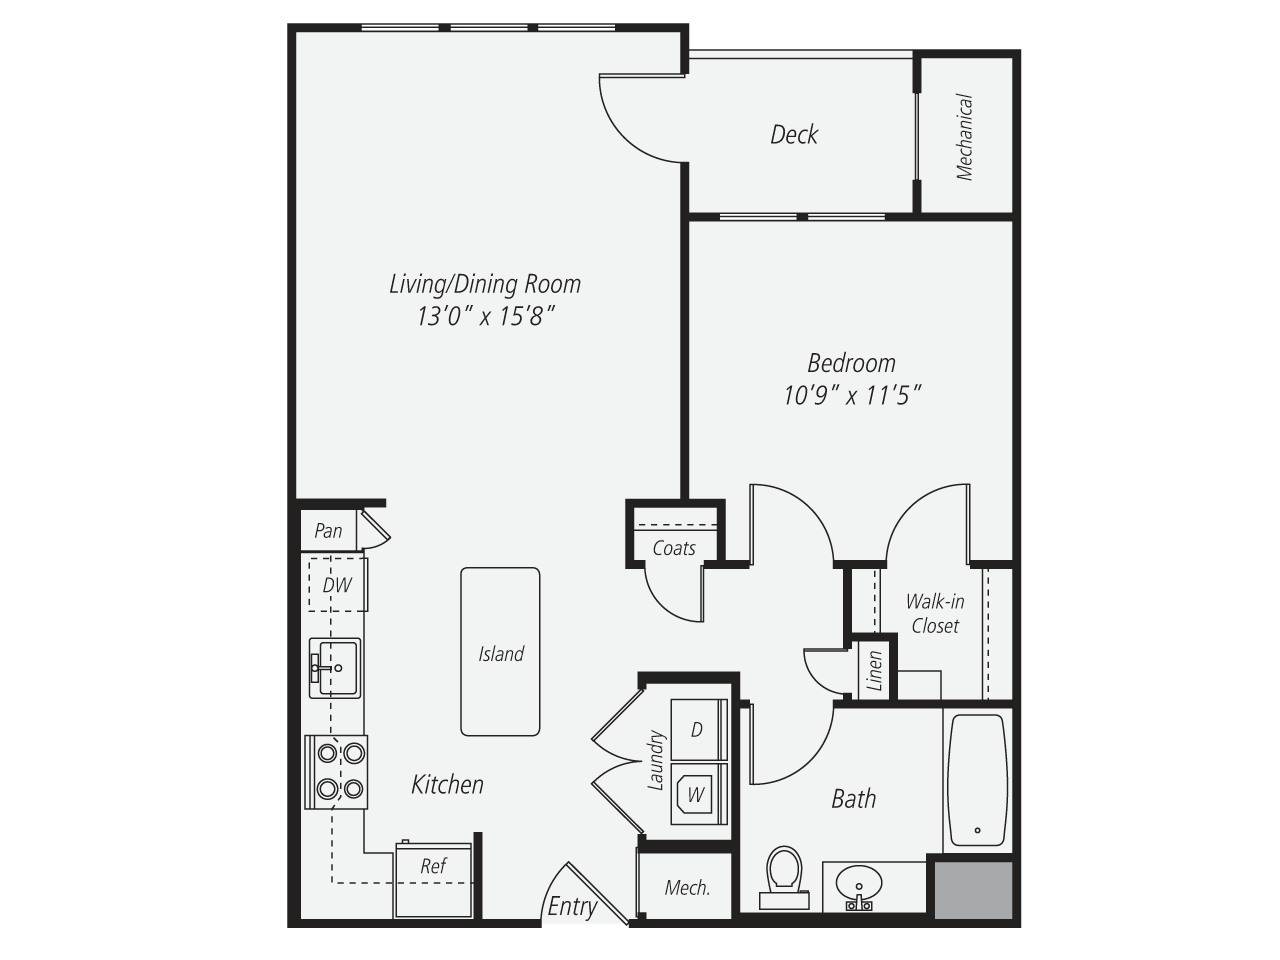 Floorplan for Apartment #111, 1 bedroom unit at Halstead Norwalk